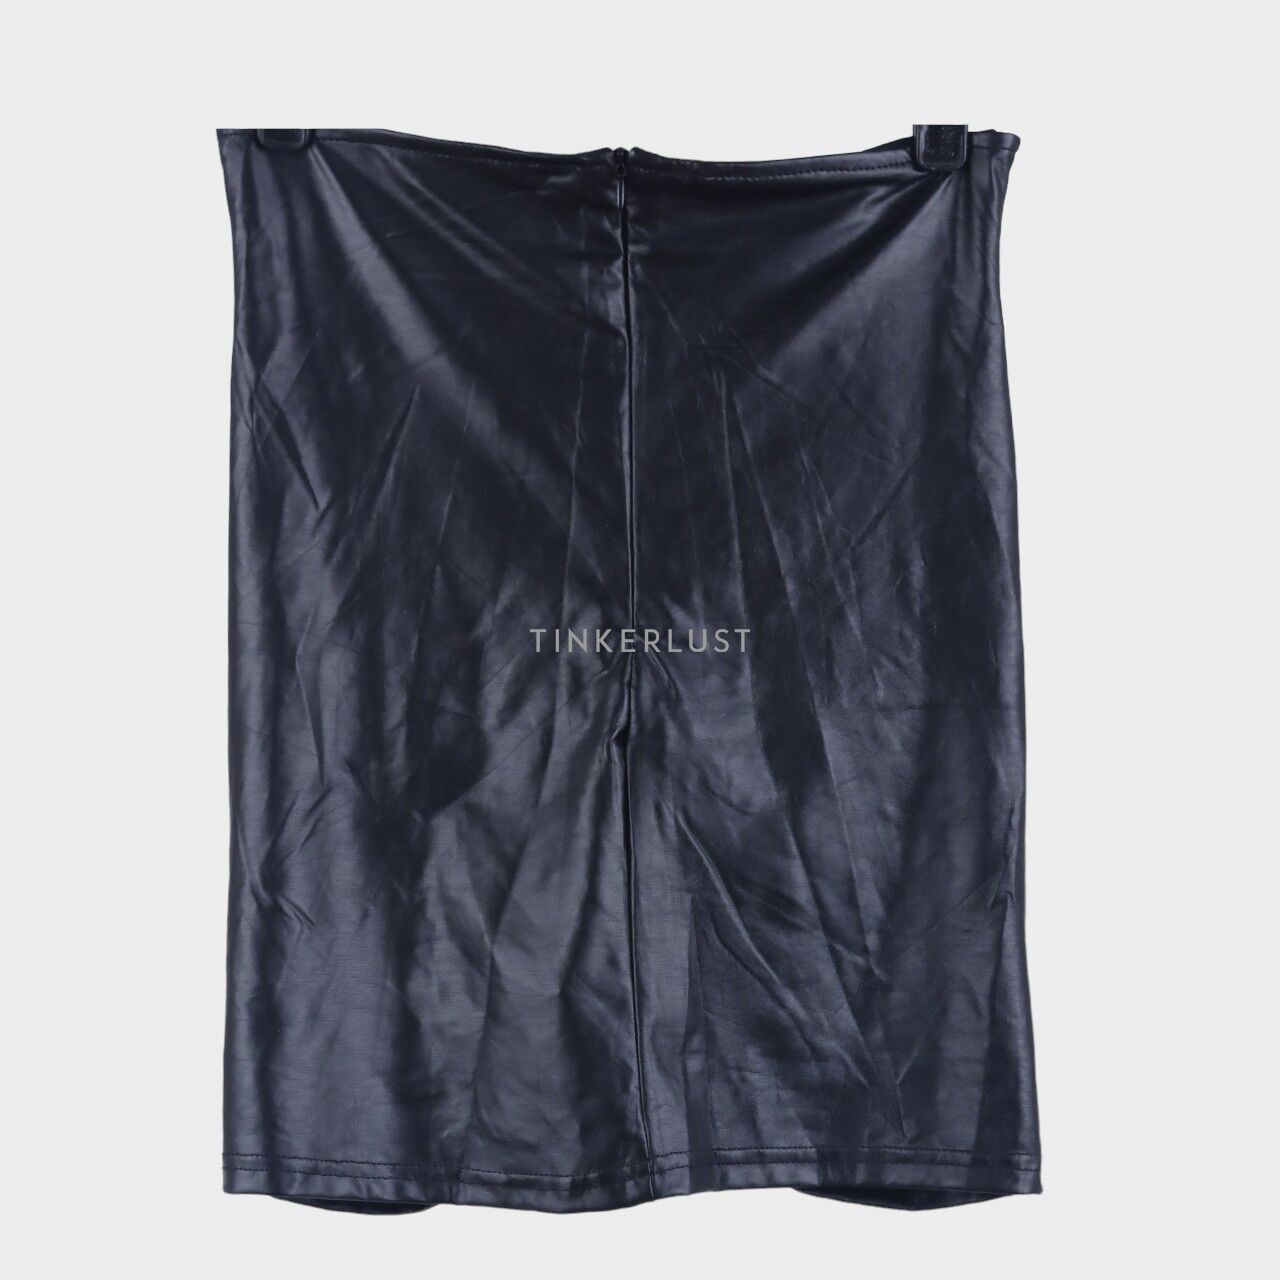 Private Collection Black Mini Skirt